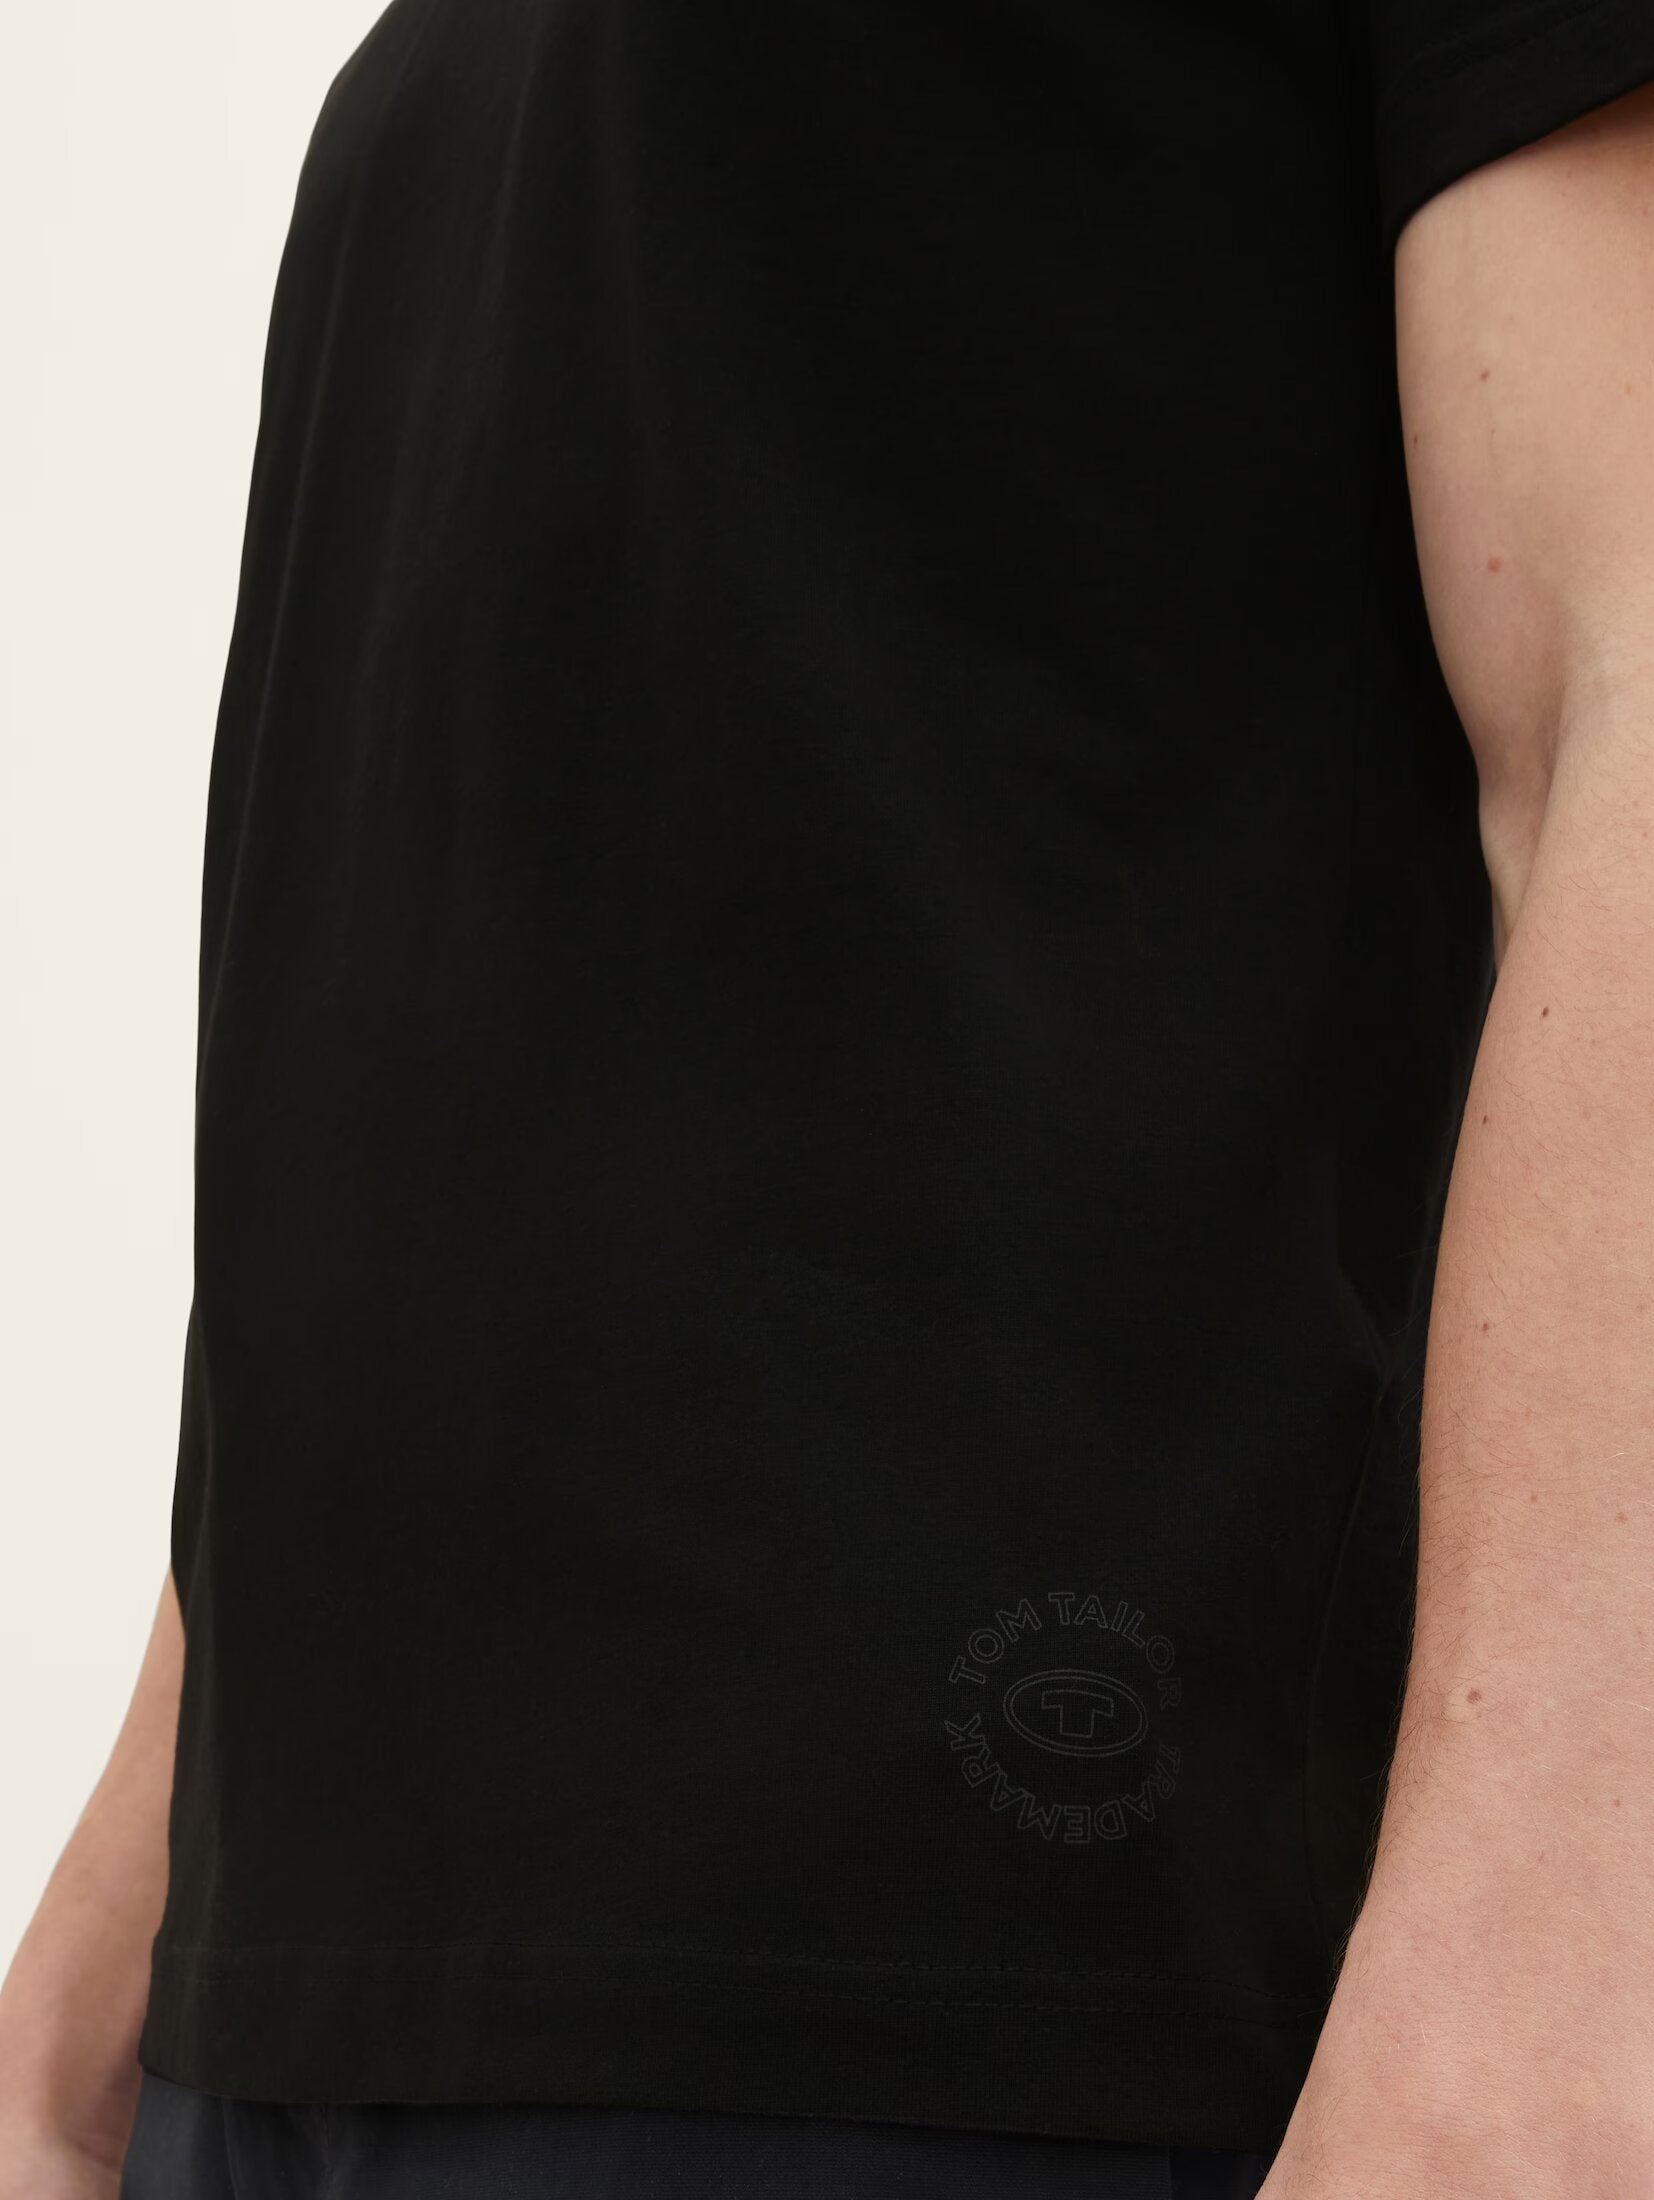 Tom Tailor Basic Black T-shirt With a Round Neckline